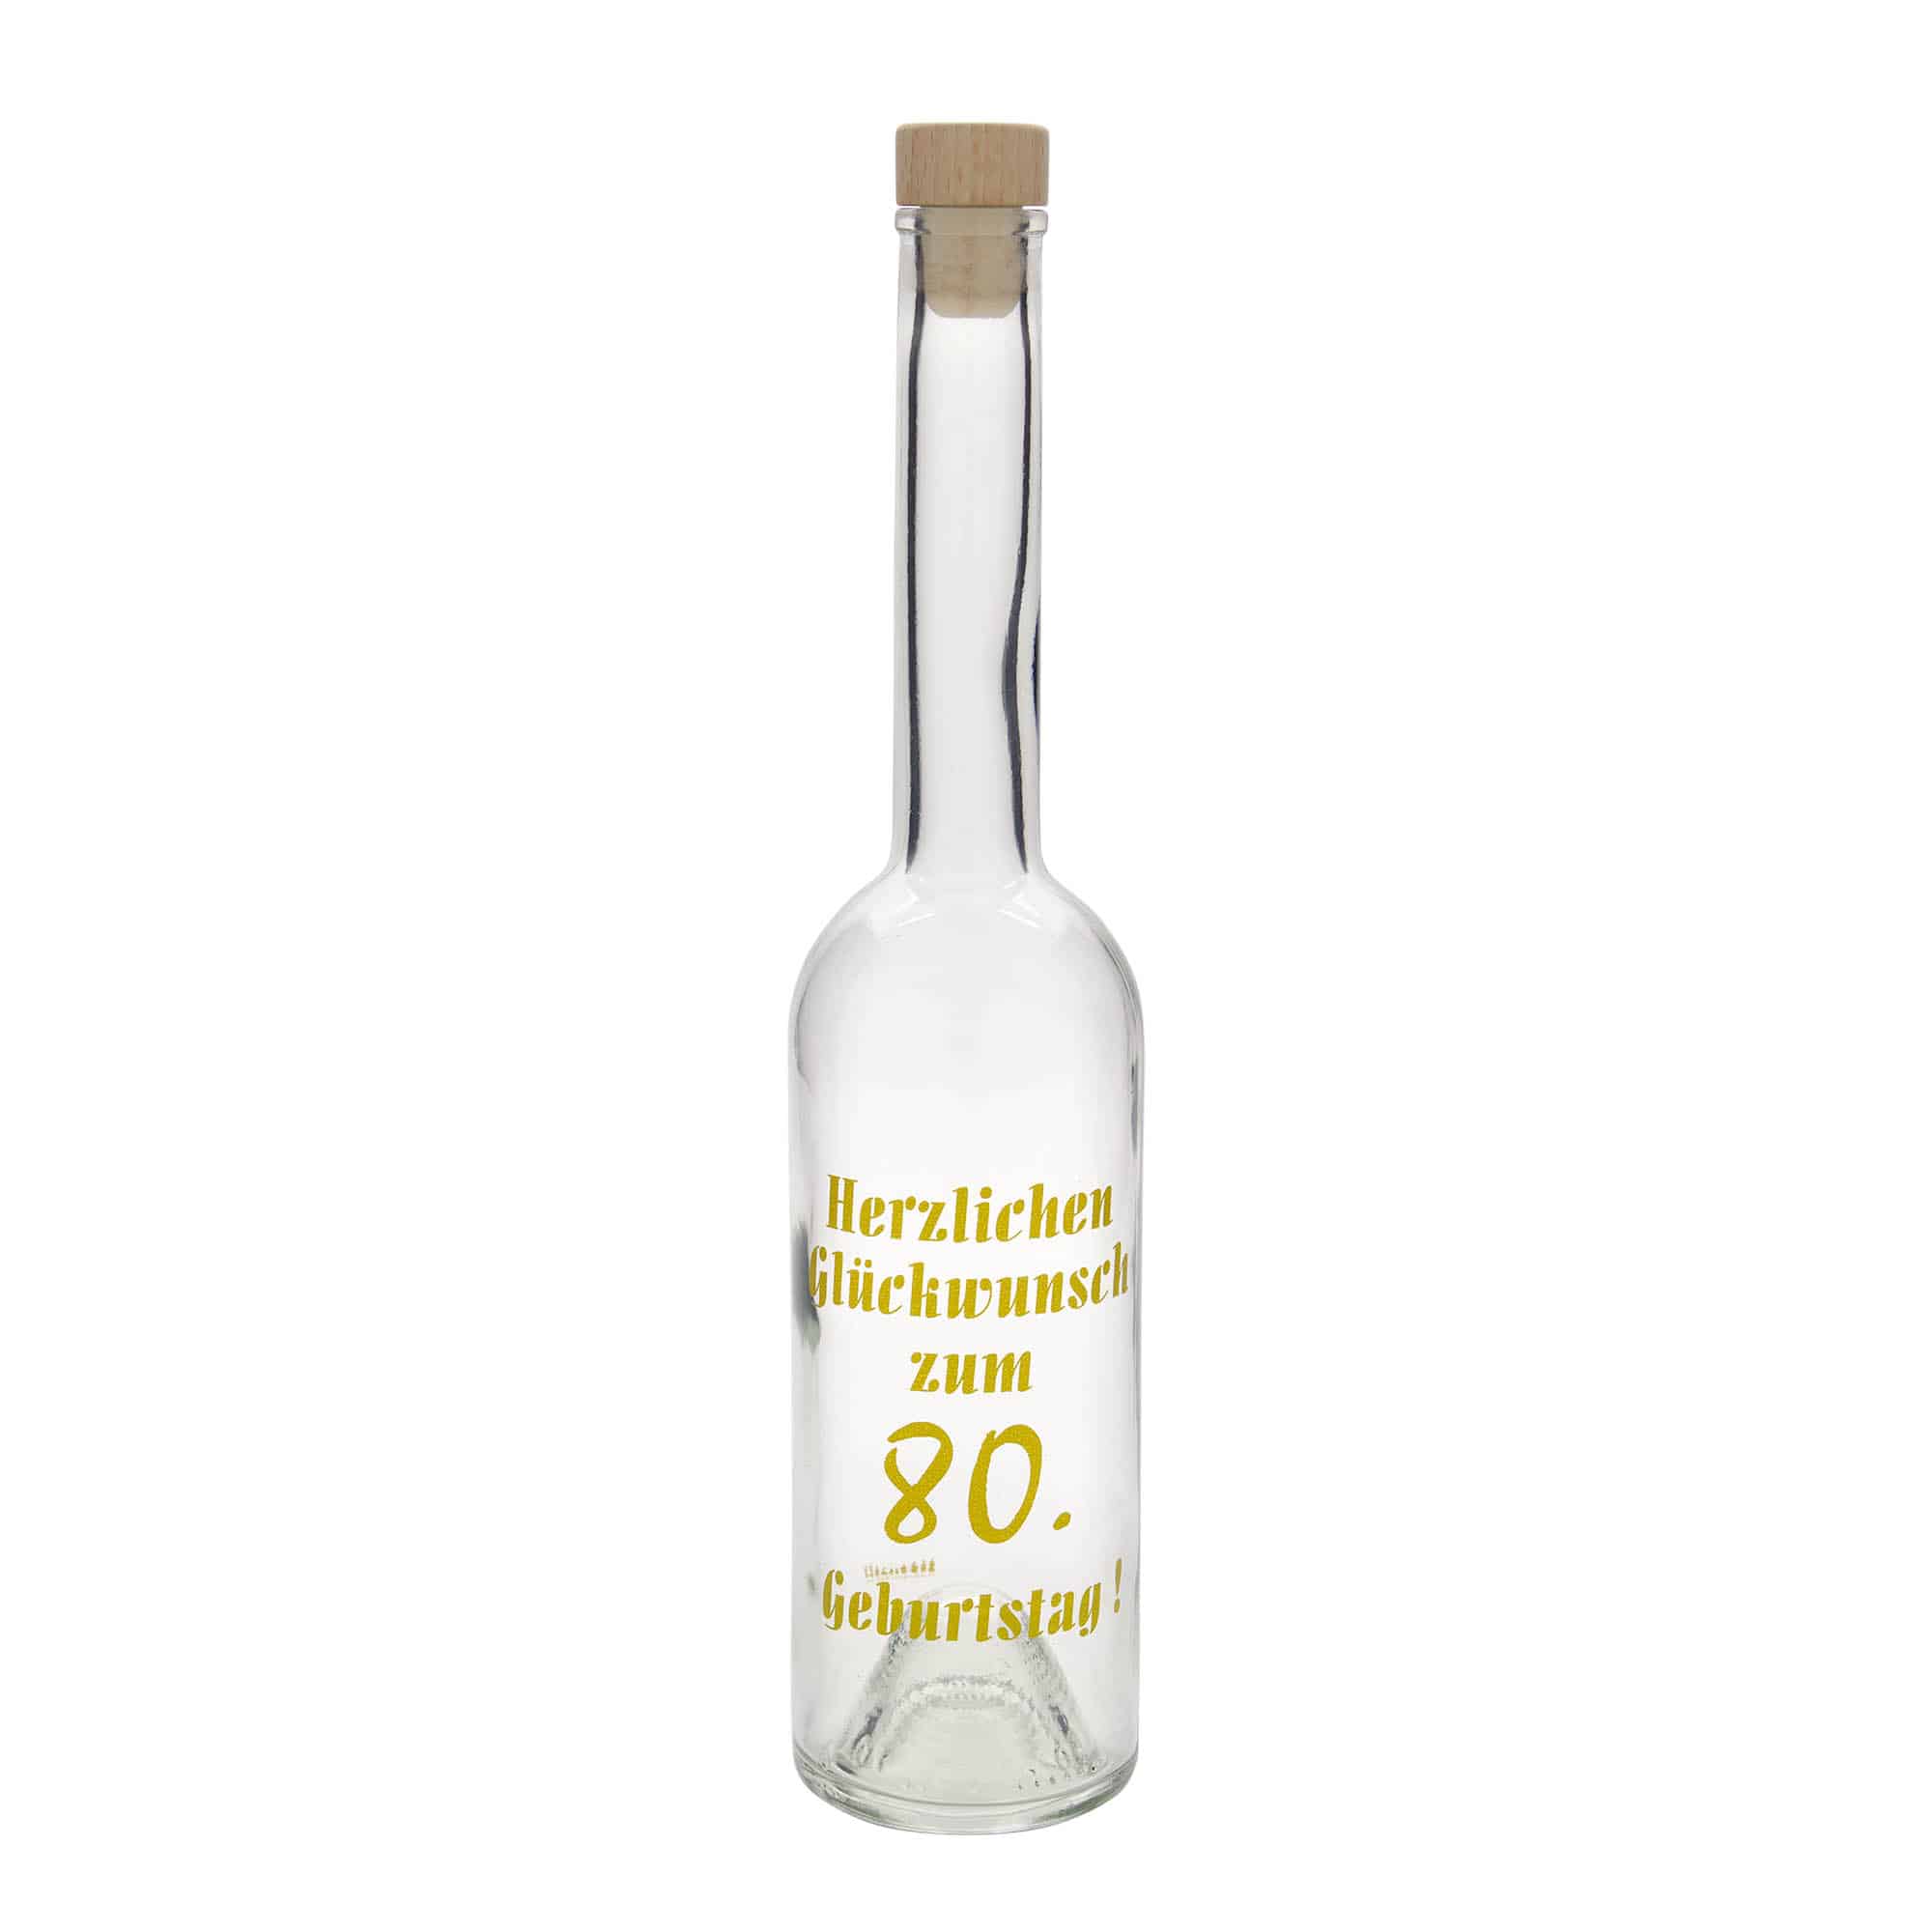 500 ml glass bottle 'Opera', print: 80 years, closure: cork